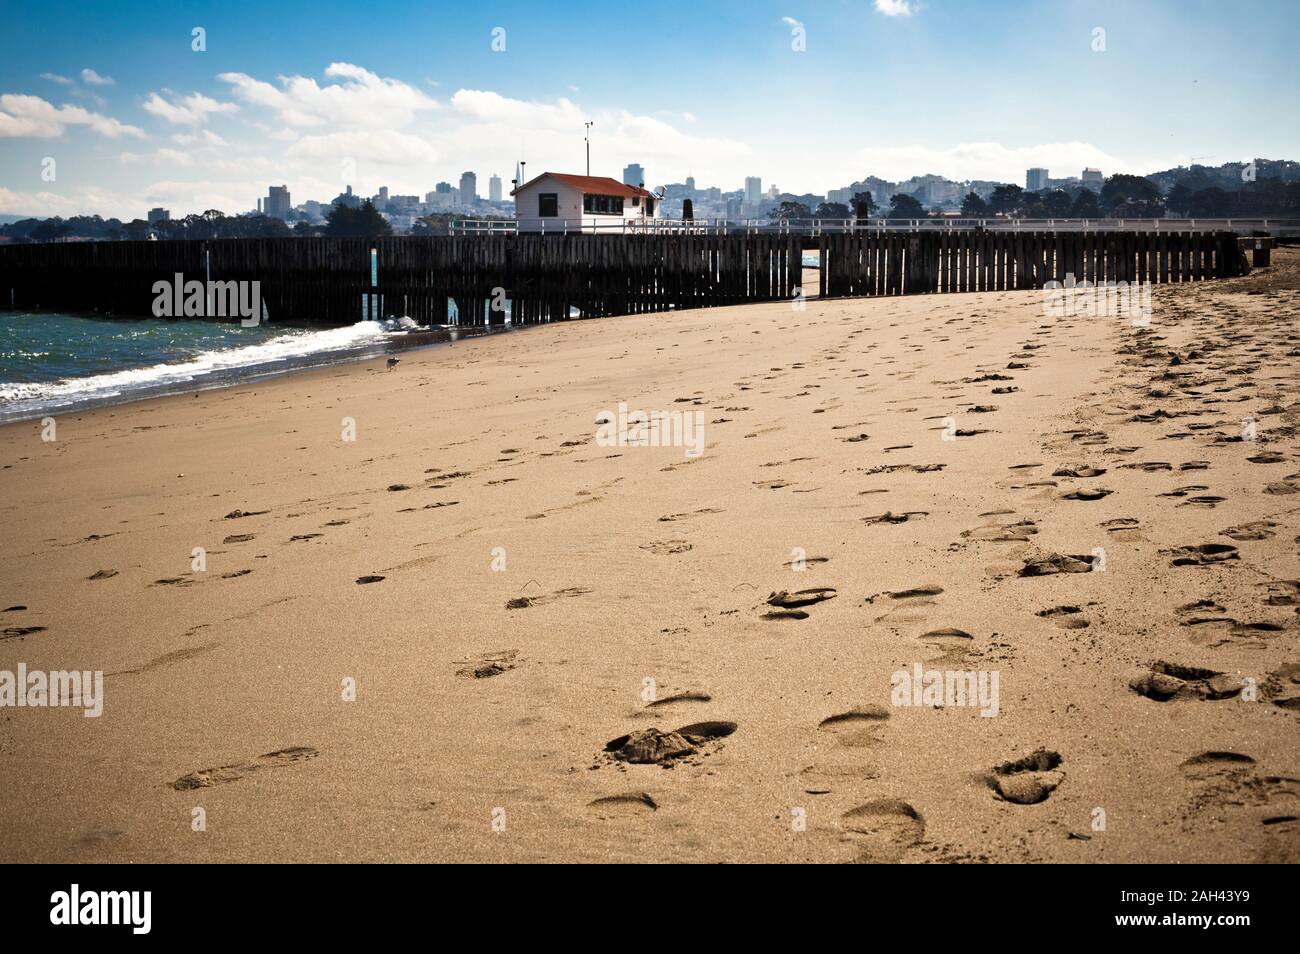 USA, California, San Francisco, Footprints on sandy coastal beach Stock Photo